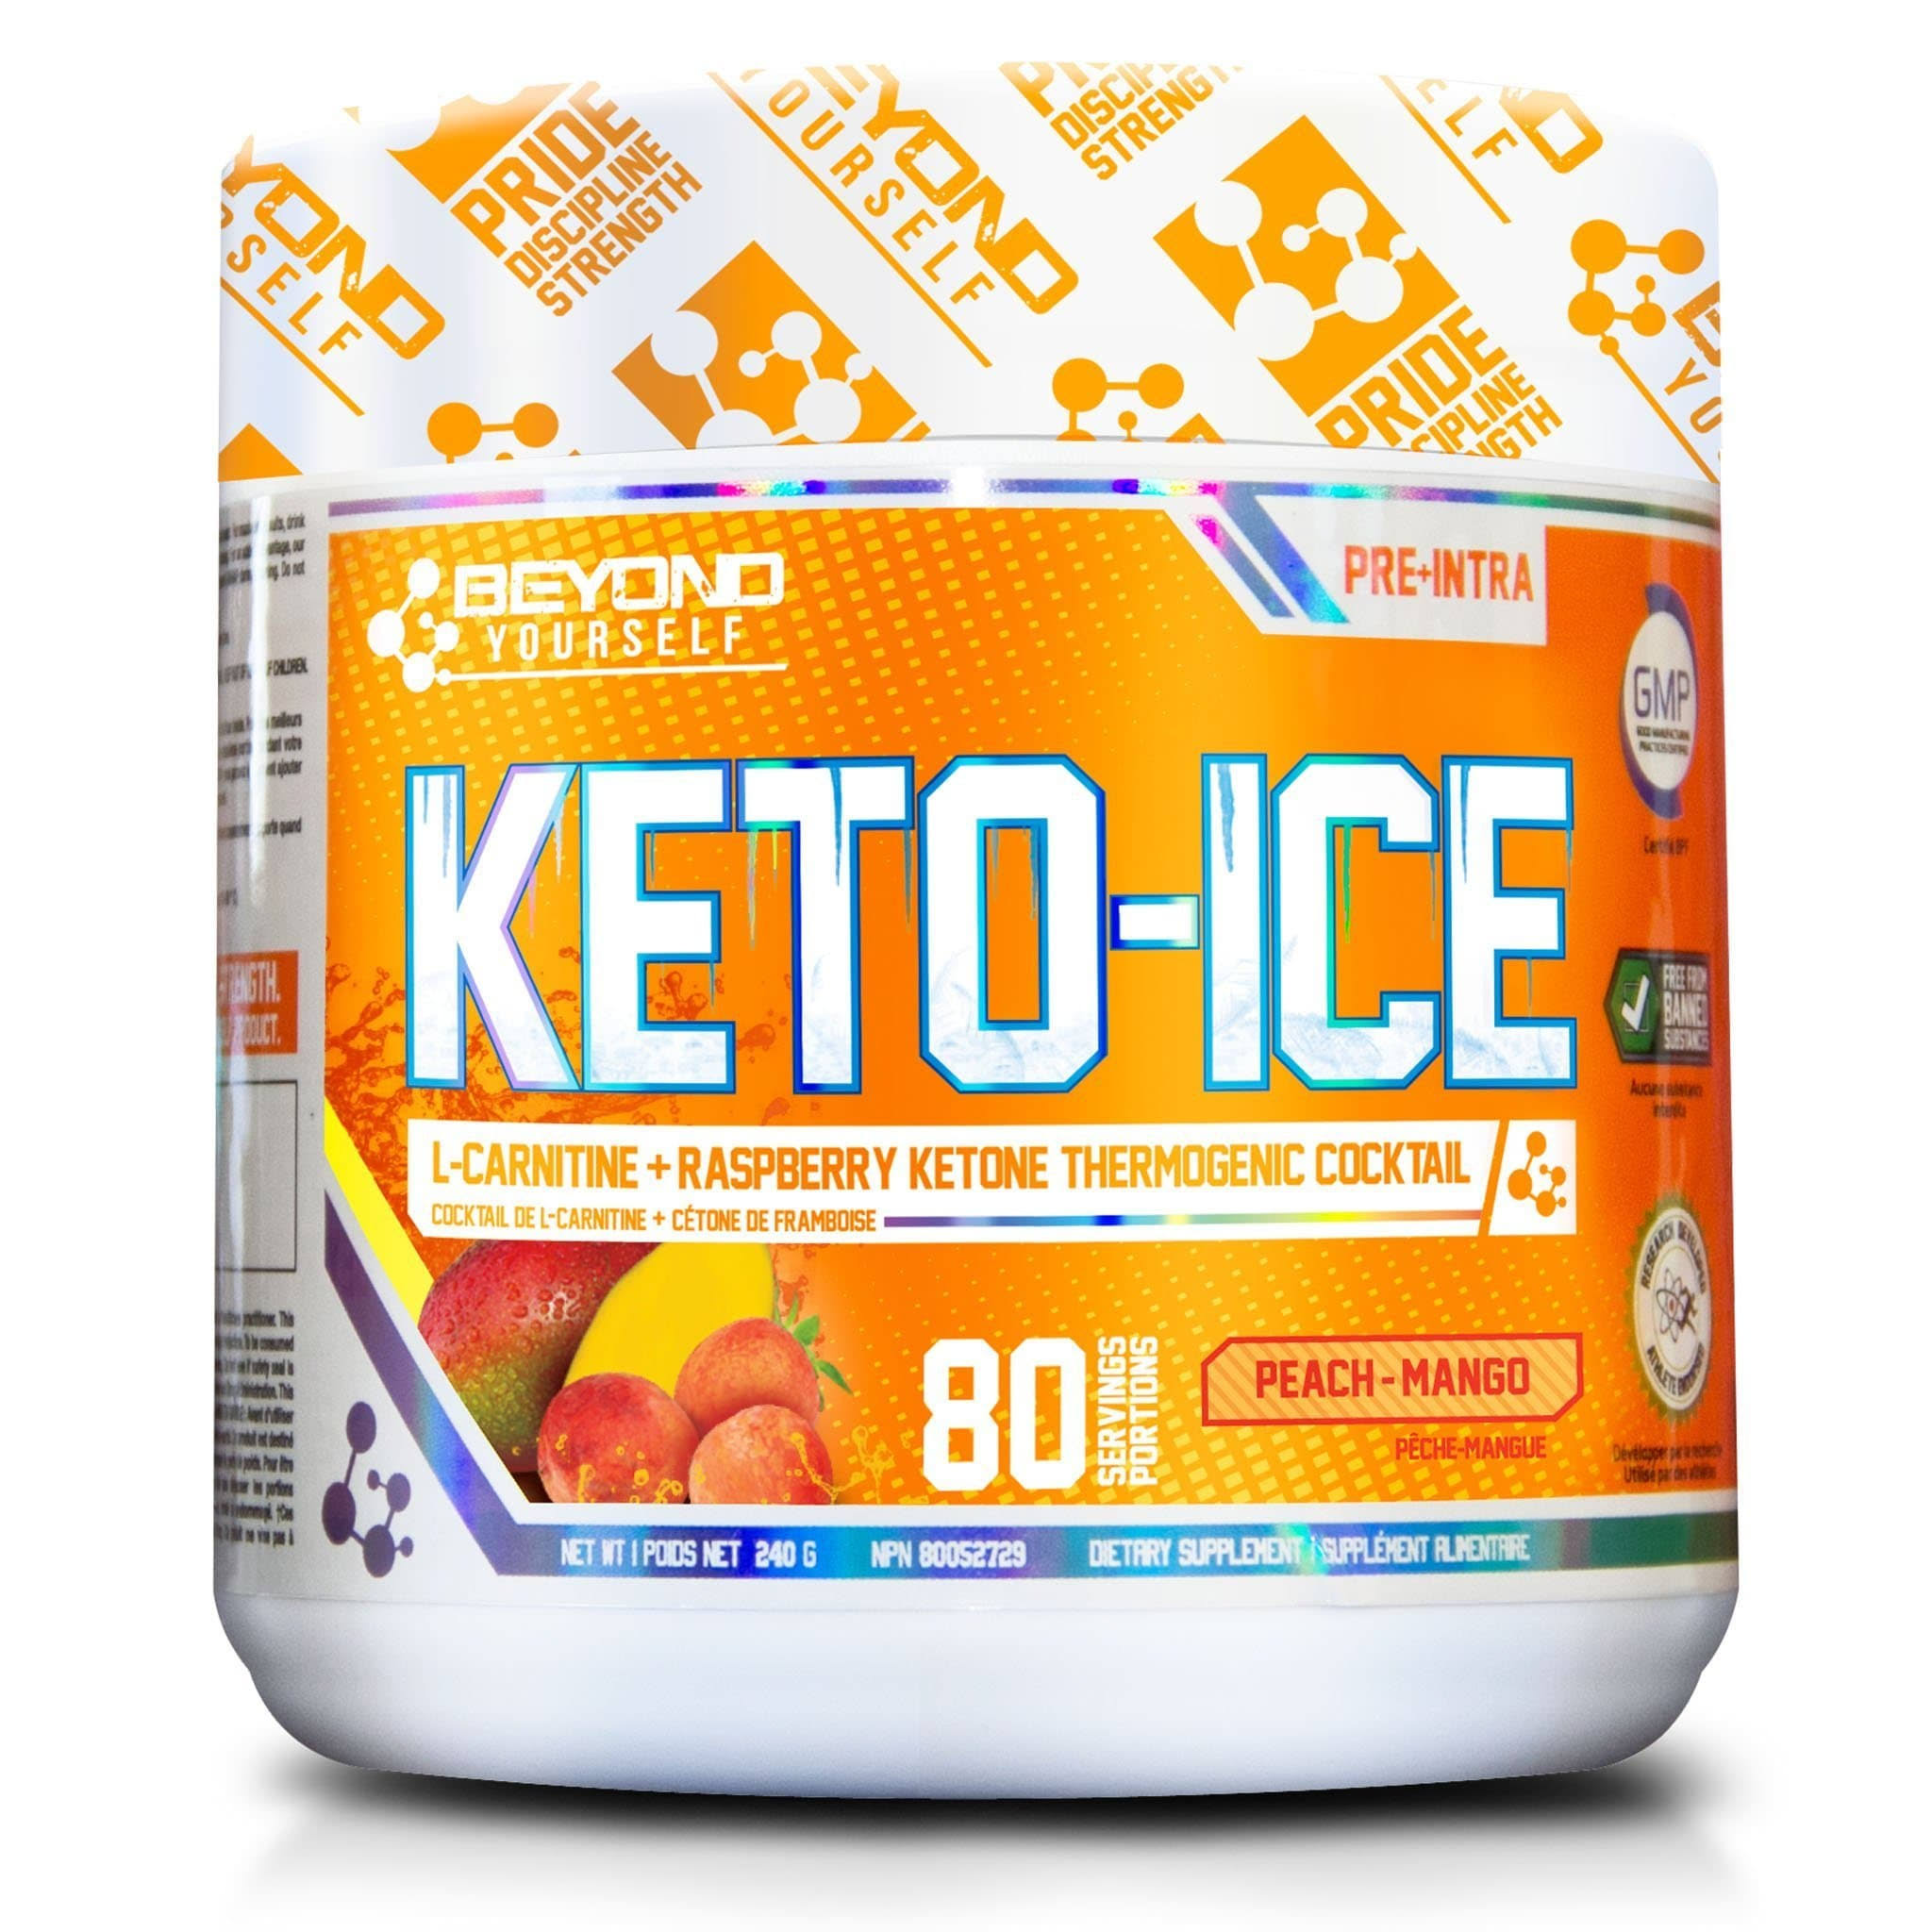 Beyond Yourself Keto Ice - 80 Servings Peach Mango